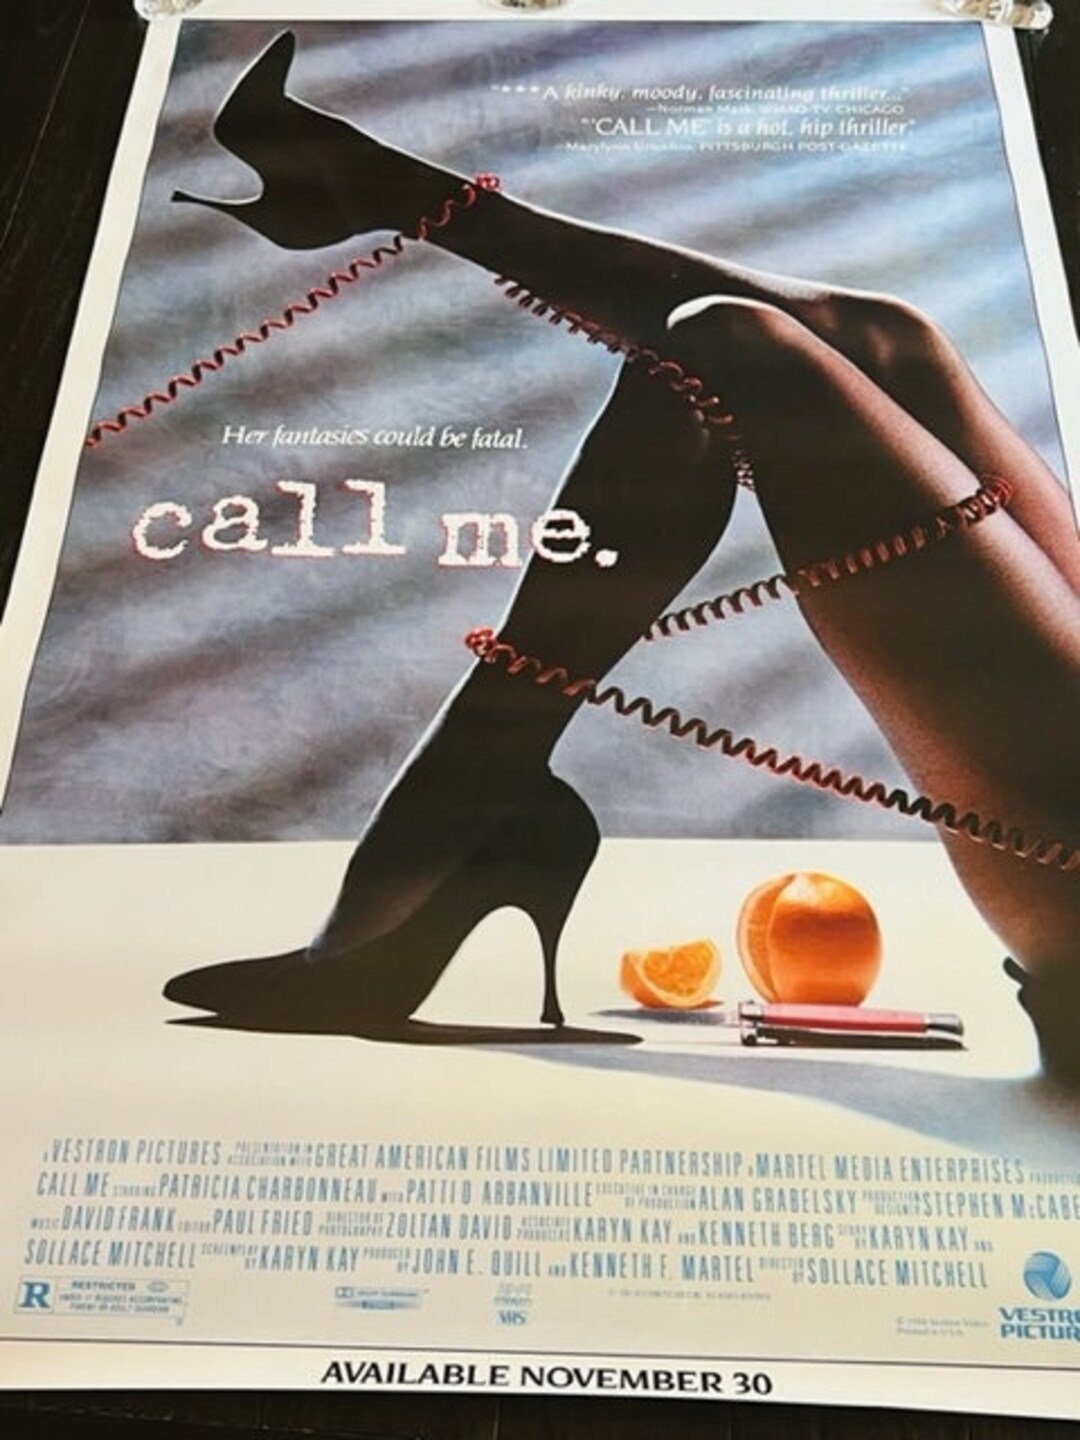 Movie Theater Cinema Poster Lobby Card 1987 Call Me Patricia Charbonneau Sex Leg Etsy